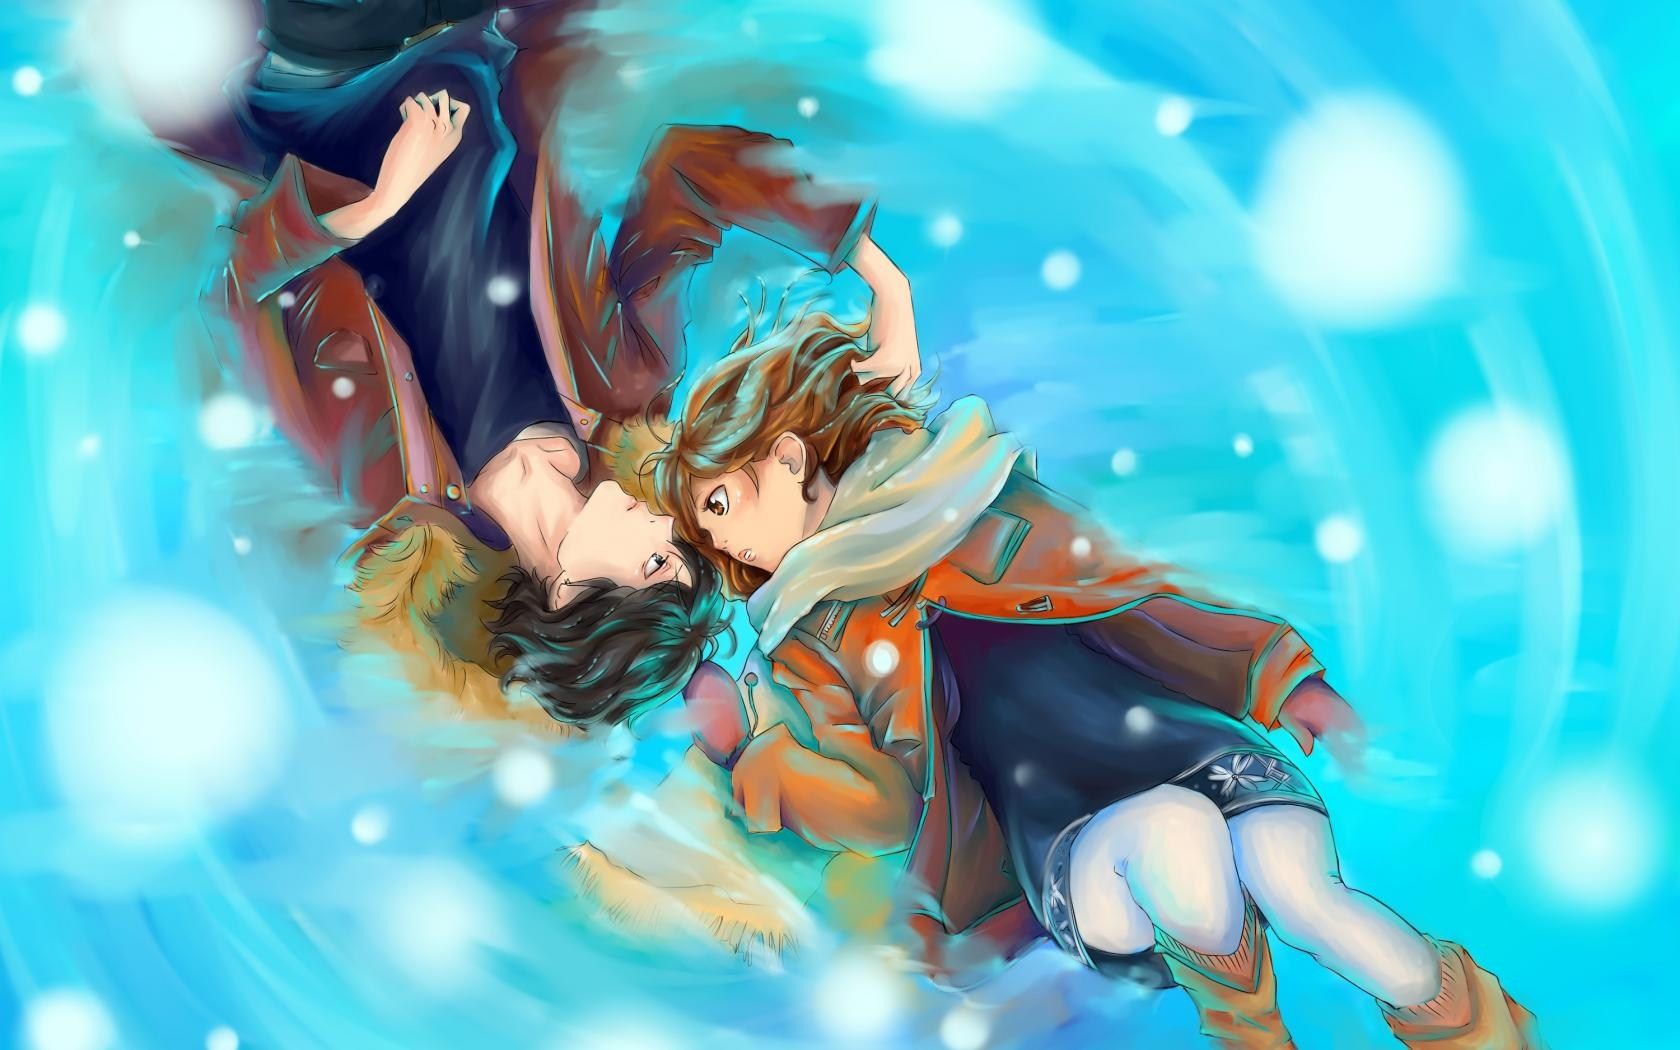 Captivating Art Anime Love Girl Boy Wallpaper Anime Haru Ride